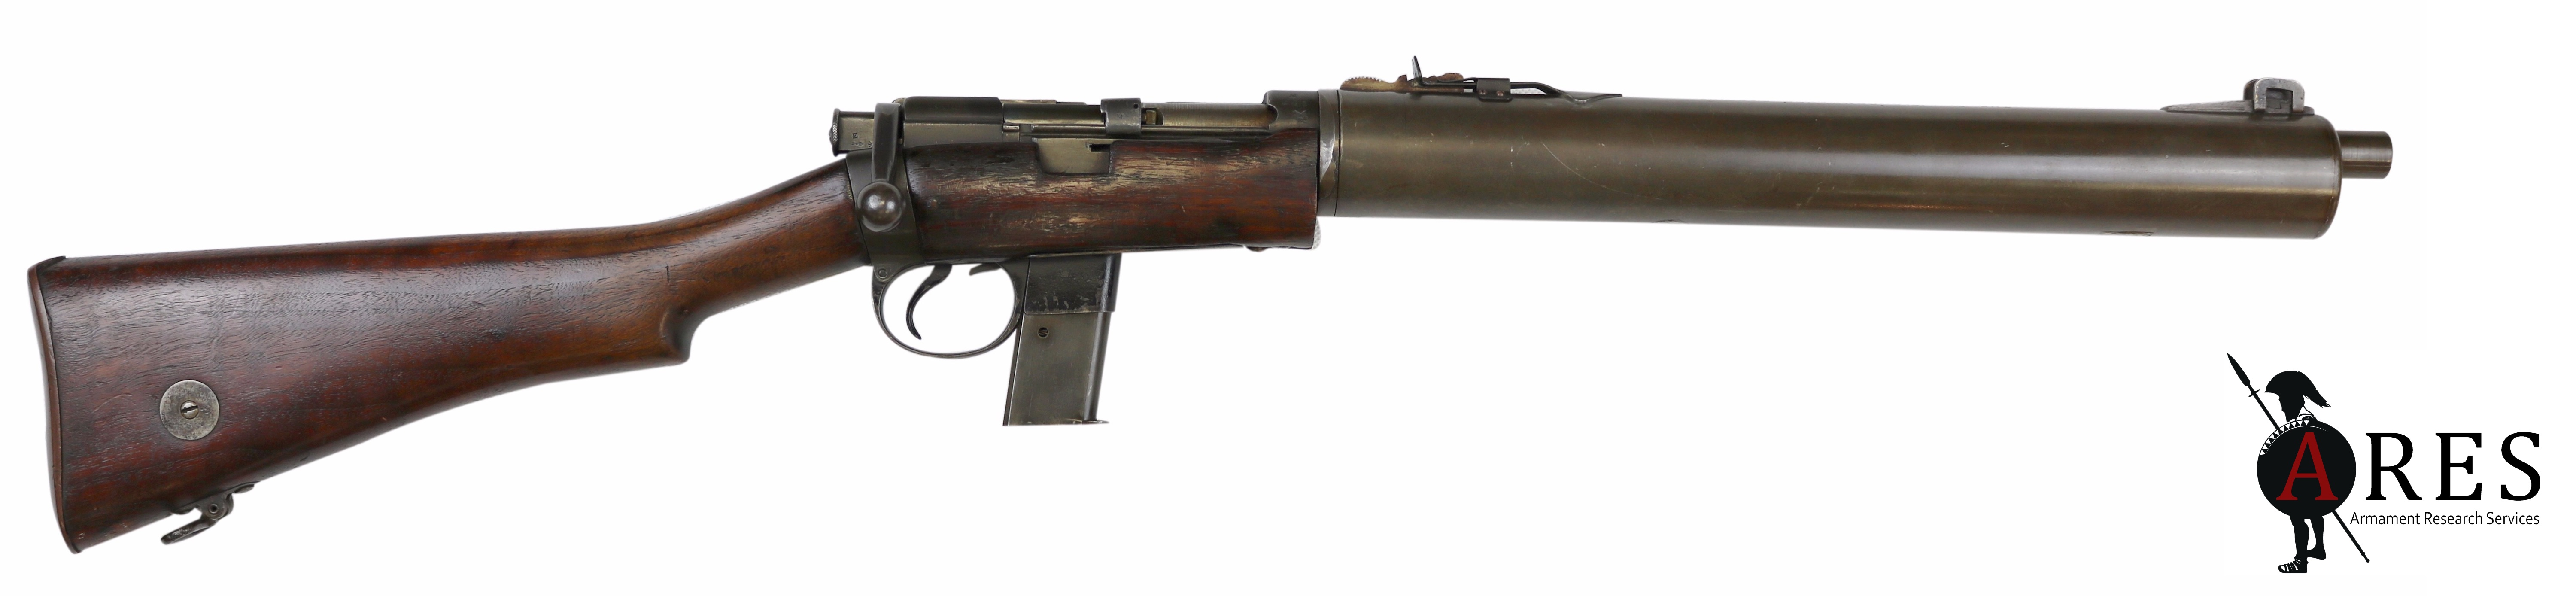 BOLT ACTION STEEL L/48 GUN BARREL WITH MUZZLE BRAKE WORLD WAR 2 RUBICON 